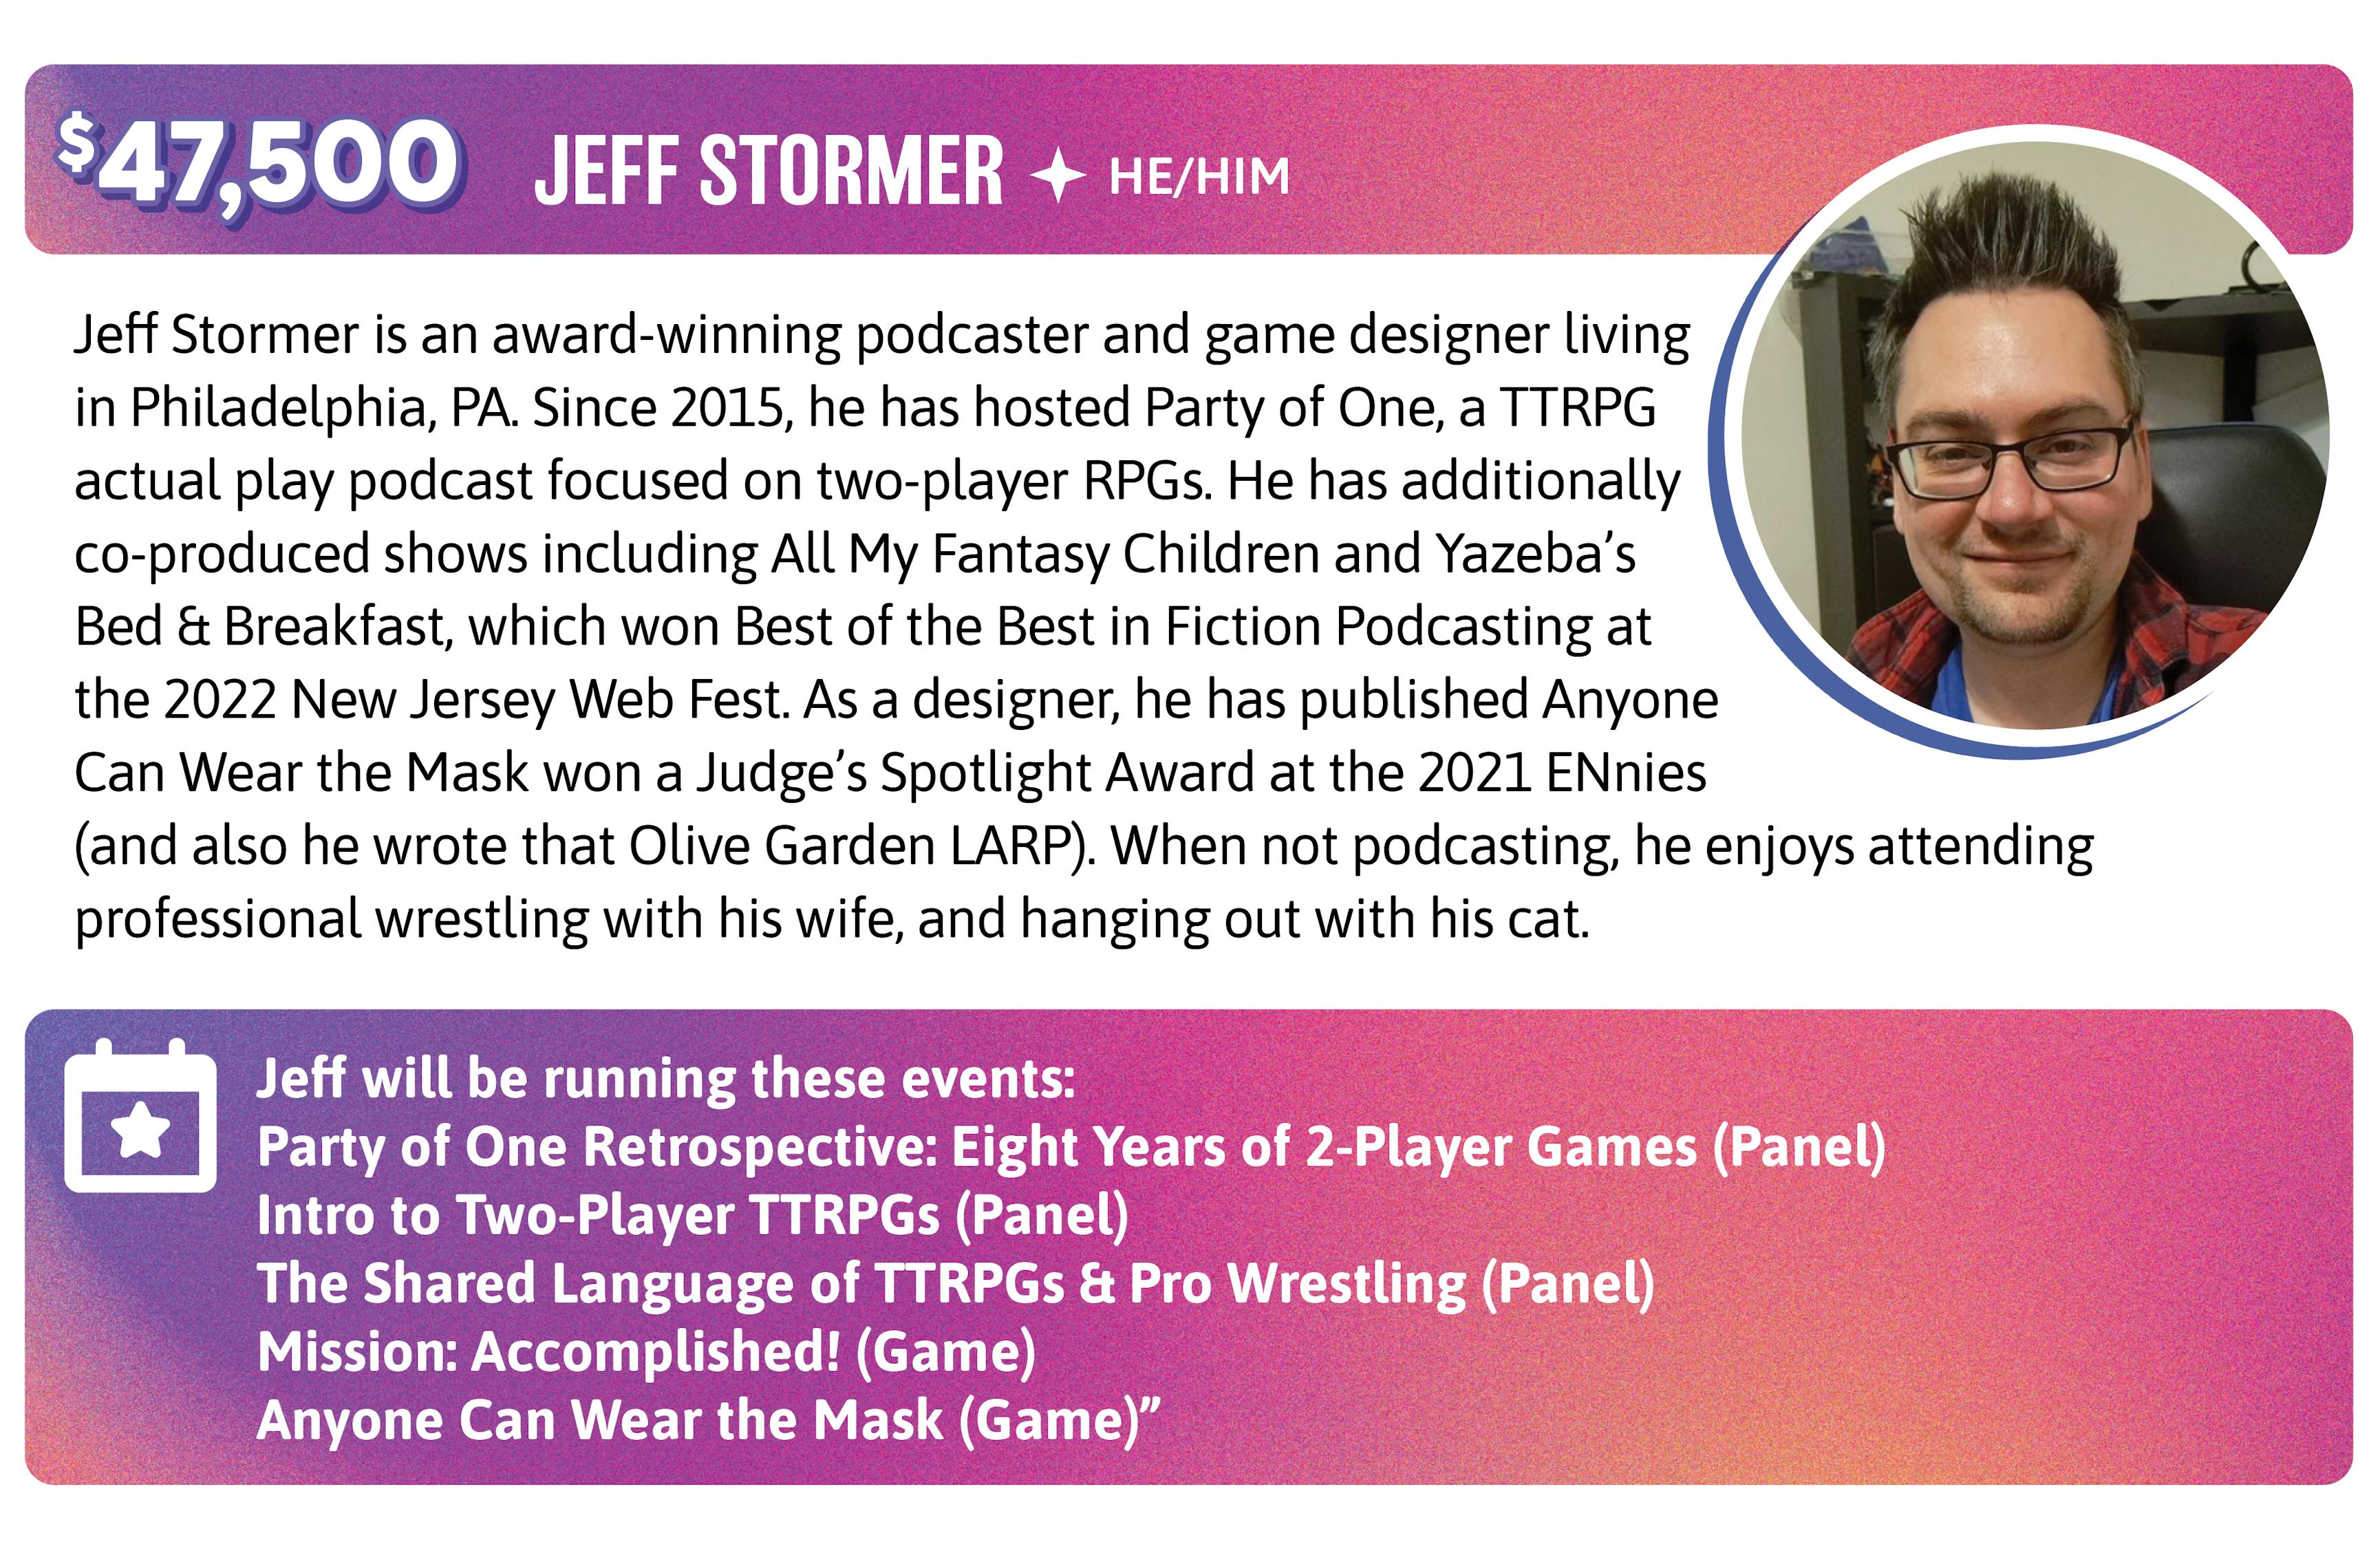 Jeff Stormer